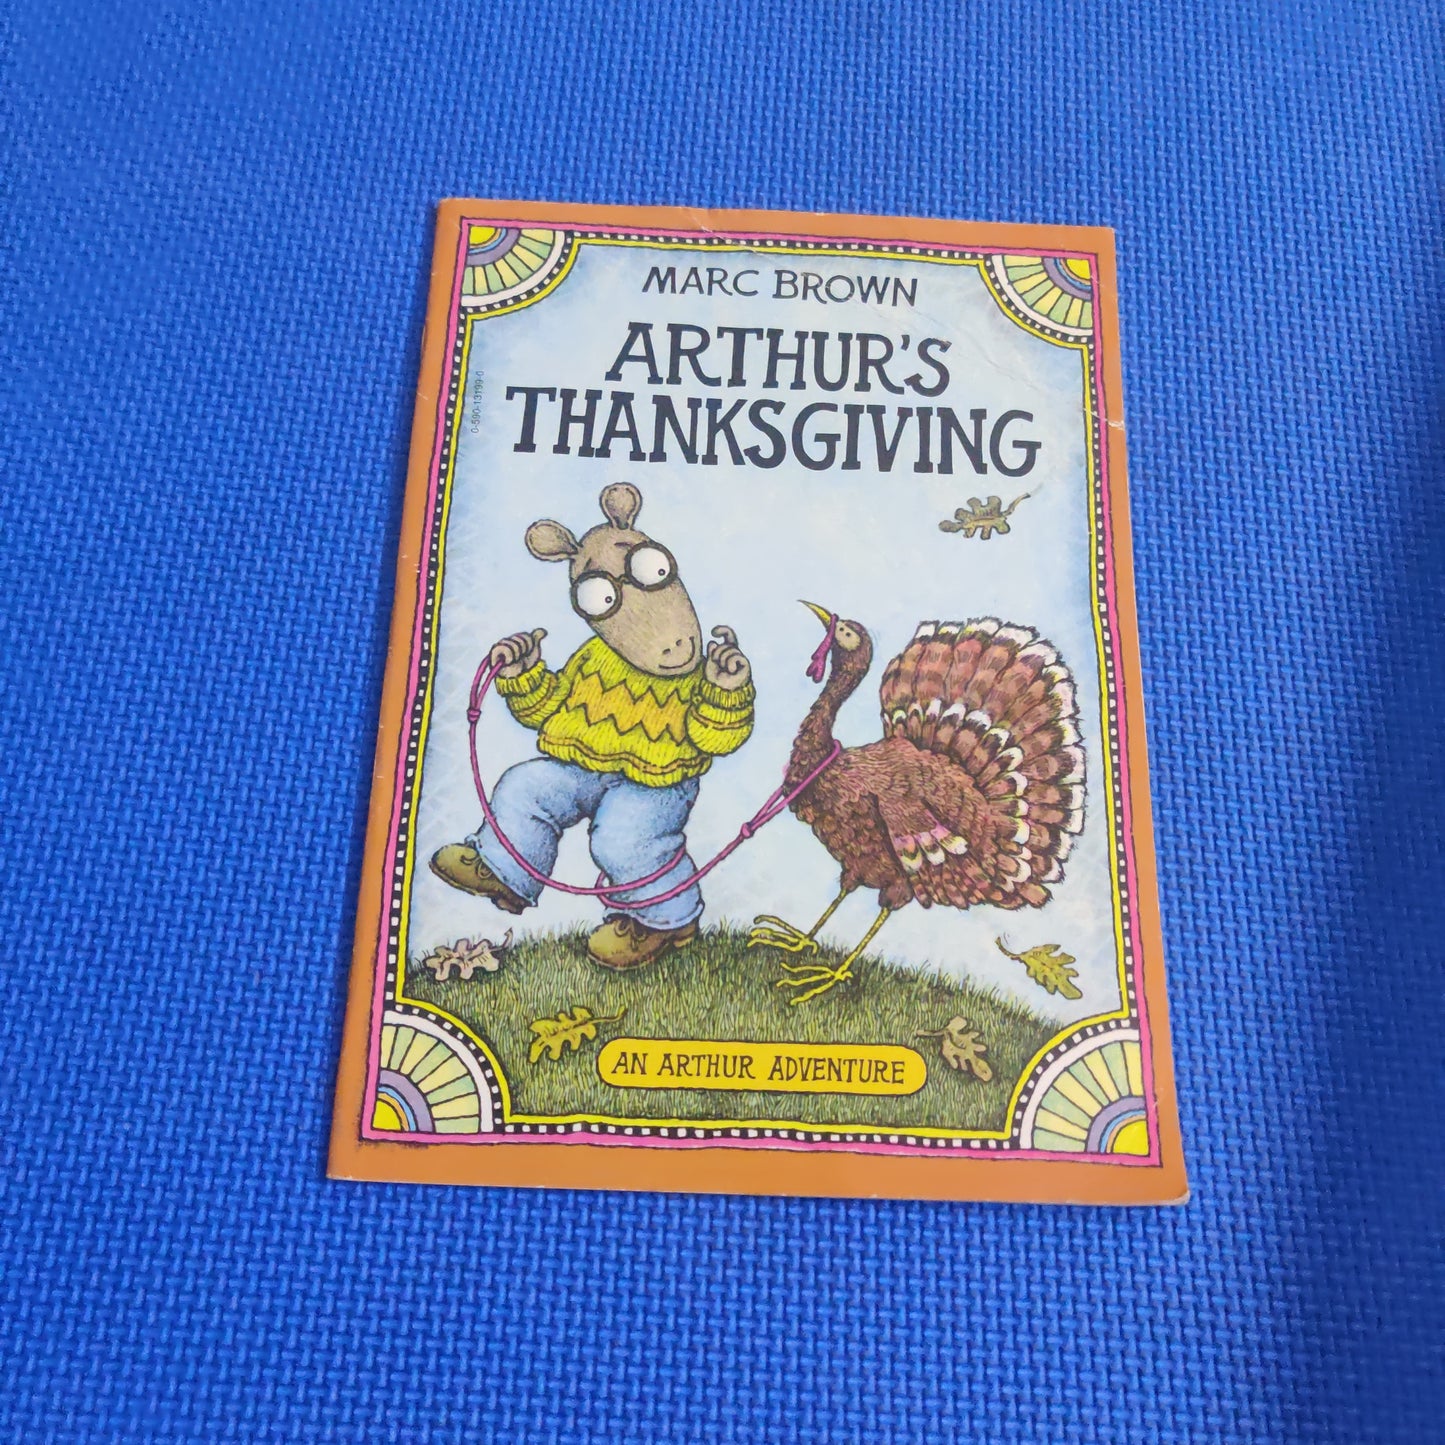 ARTHUR'S THANKSGIVING